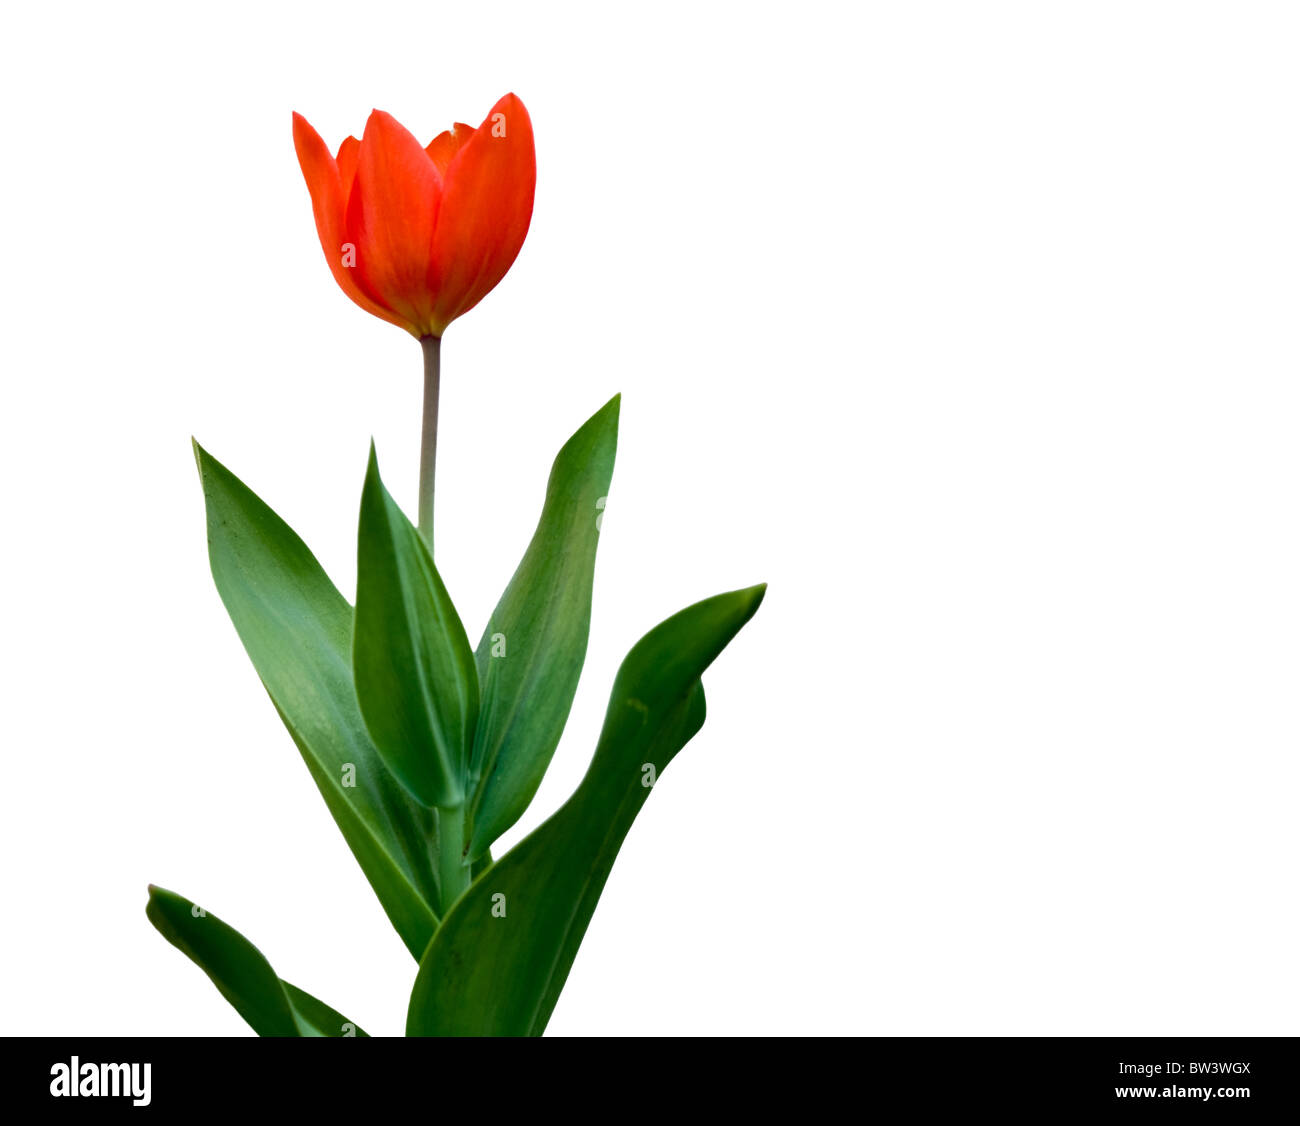 Hermoso tulipán rojo brillante sobre fondo blanco. Foto de stock